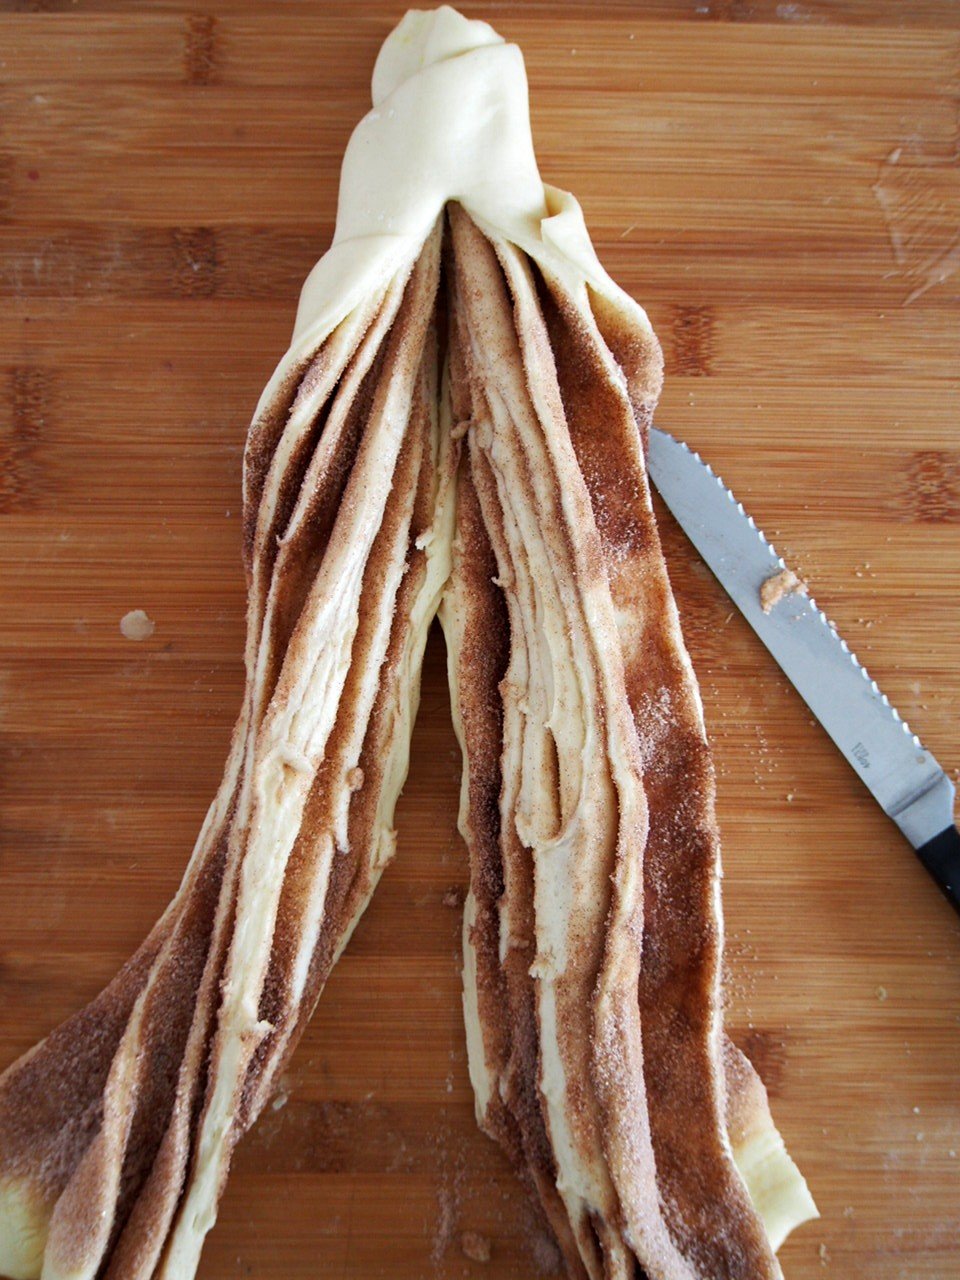 The cinnamon bread log split into half vertically.